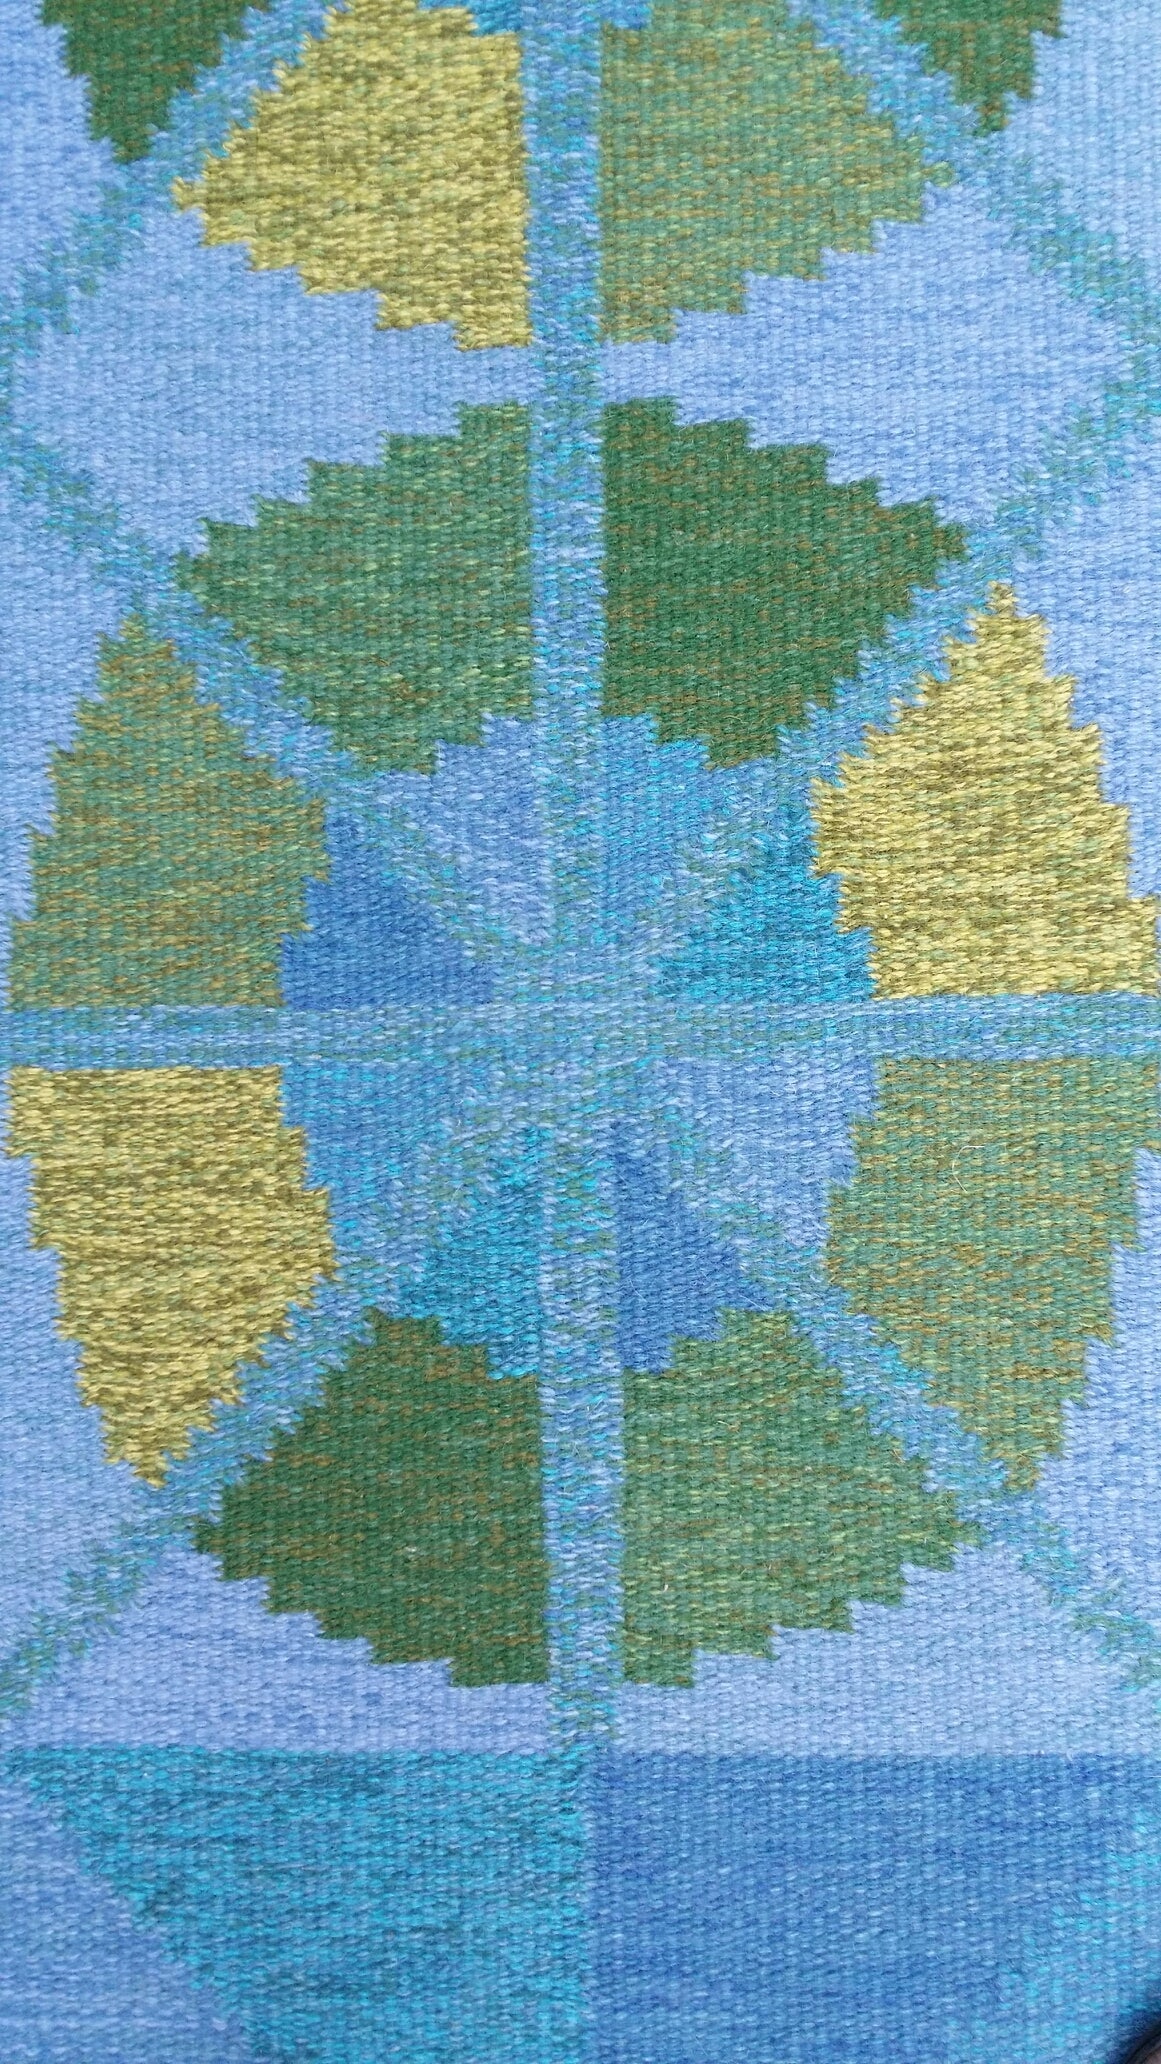 Swedish flat-woven rug in rröakan technique. Designed by Birgitta Södergren. Signed: BS. Warp: light beige linen yarn. Weft: wool. Condition: Good,water cleaned,two small repaired areas .